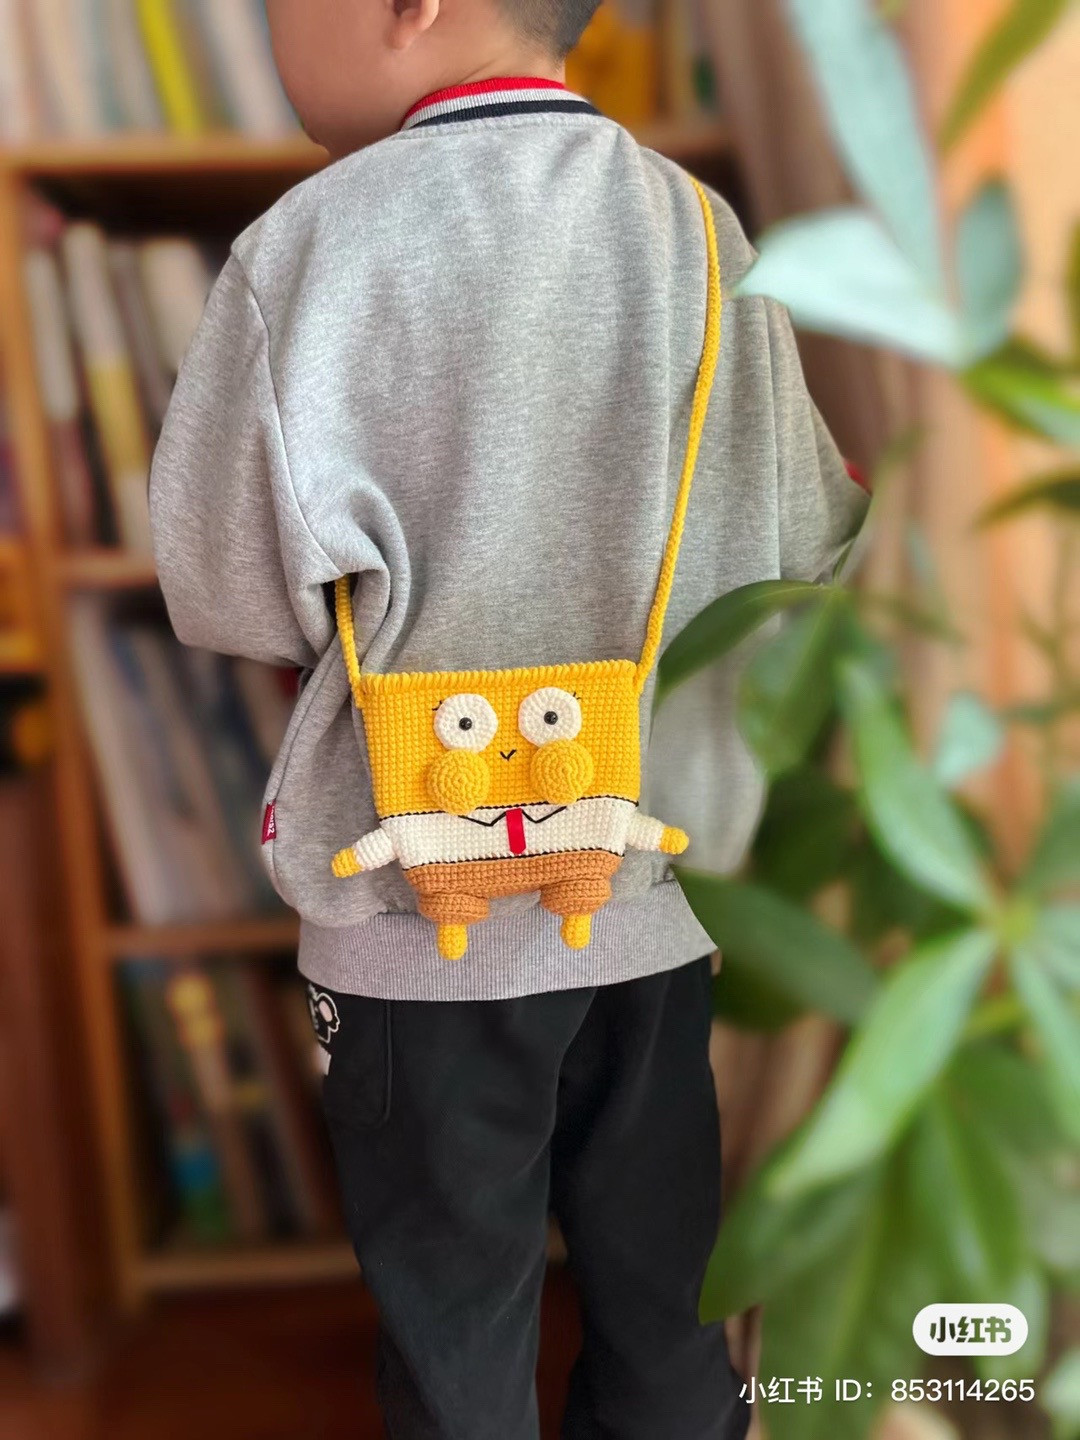 SpongeBob SquarePants backpack crochet pattern